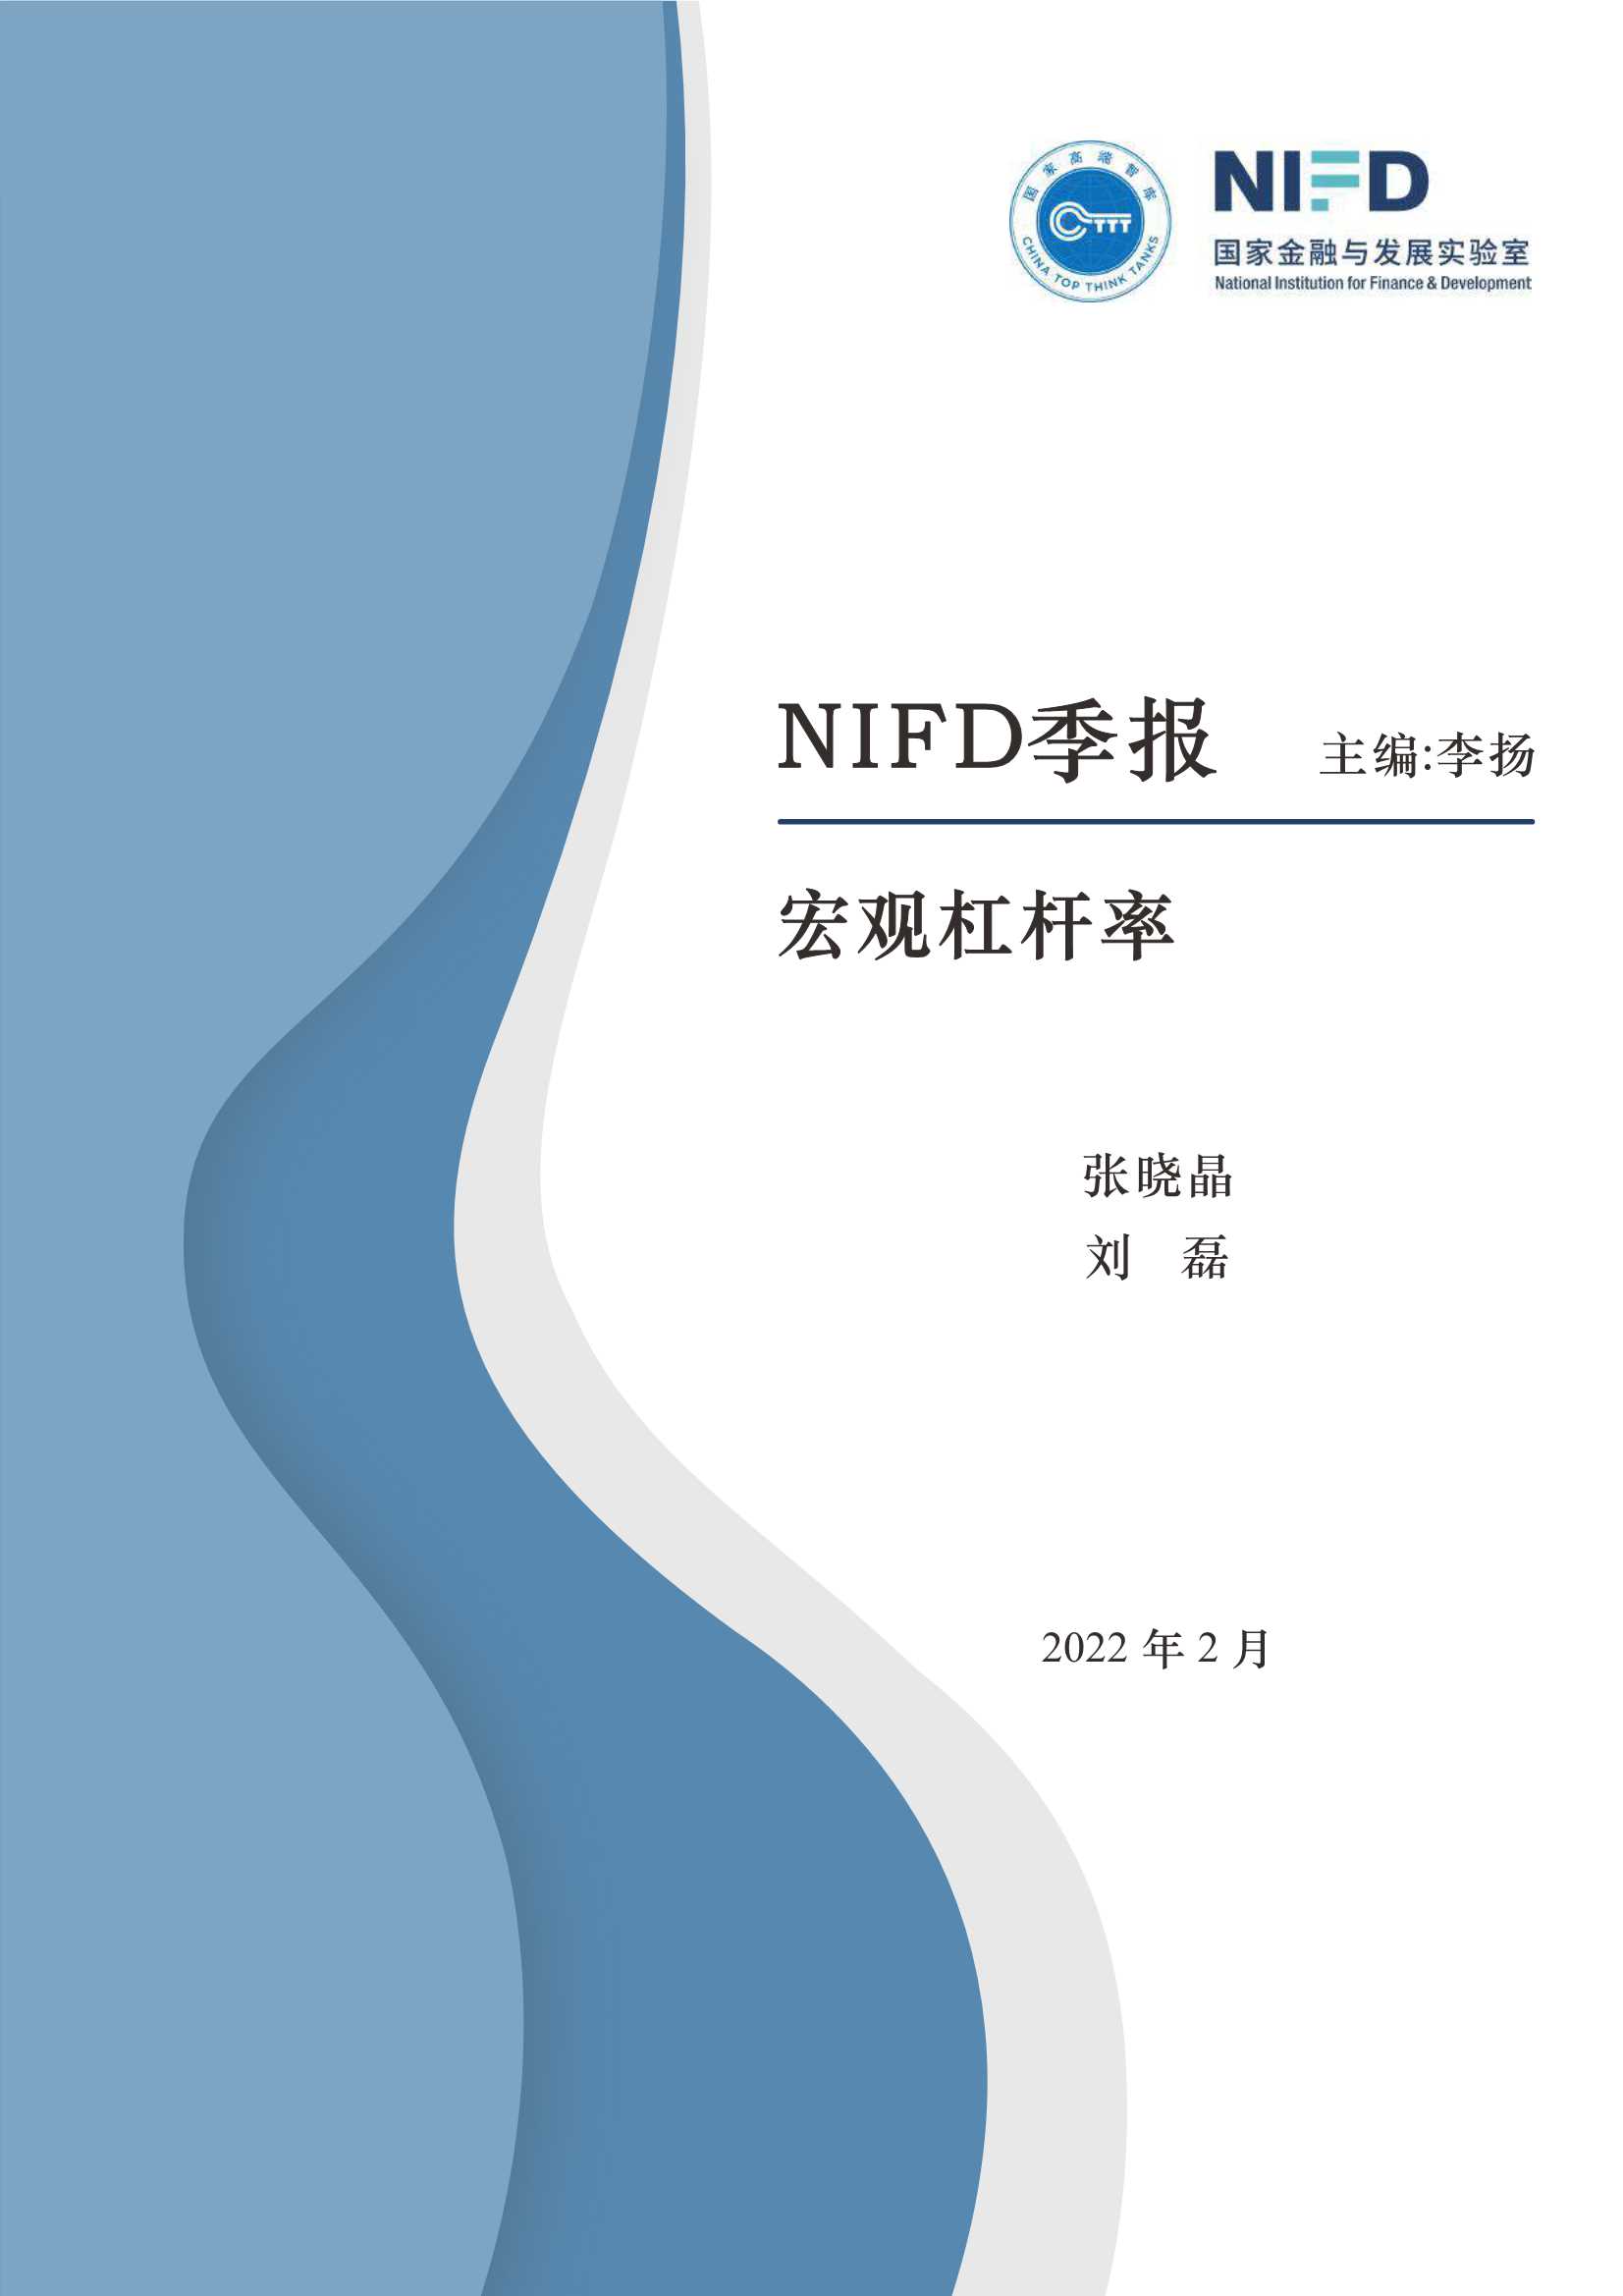 NIFD-2021年度中国杠杆率报告-2022.02-31页